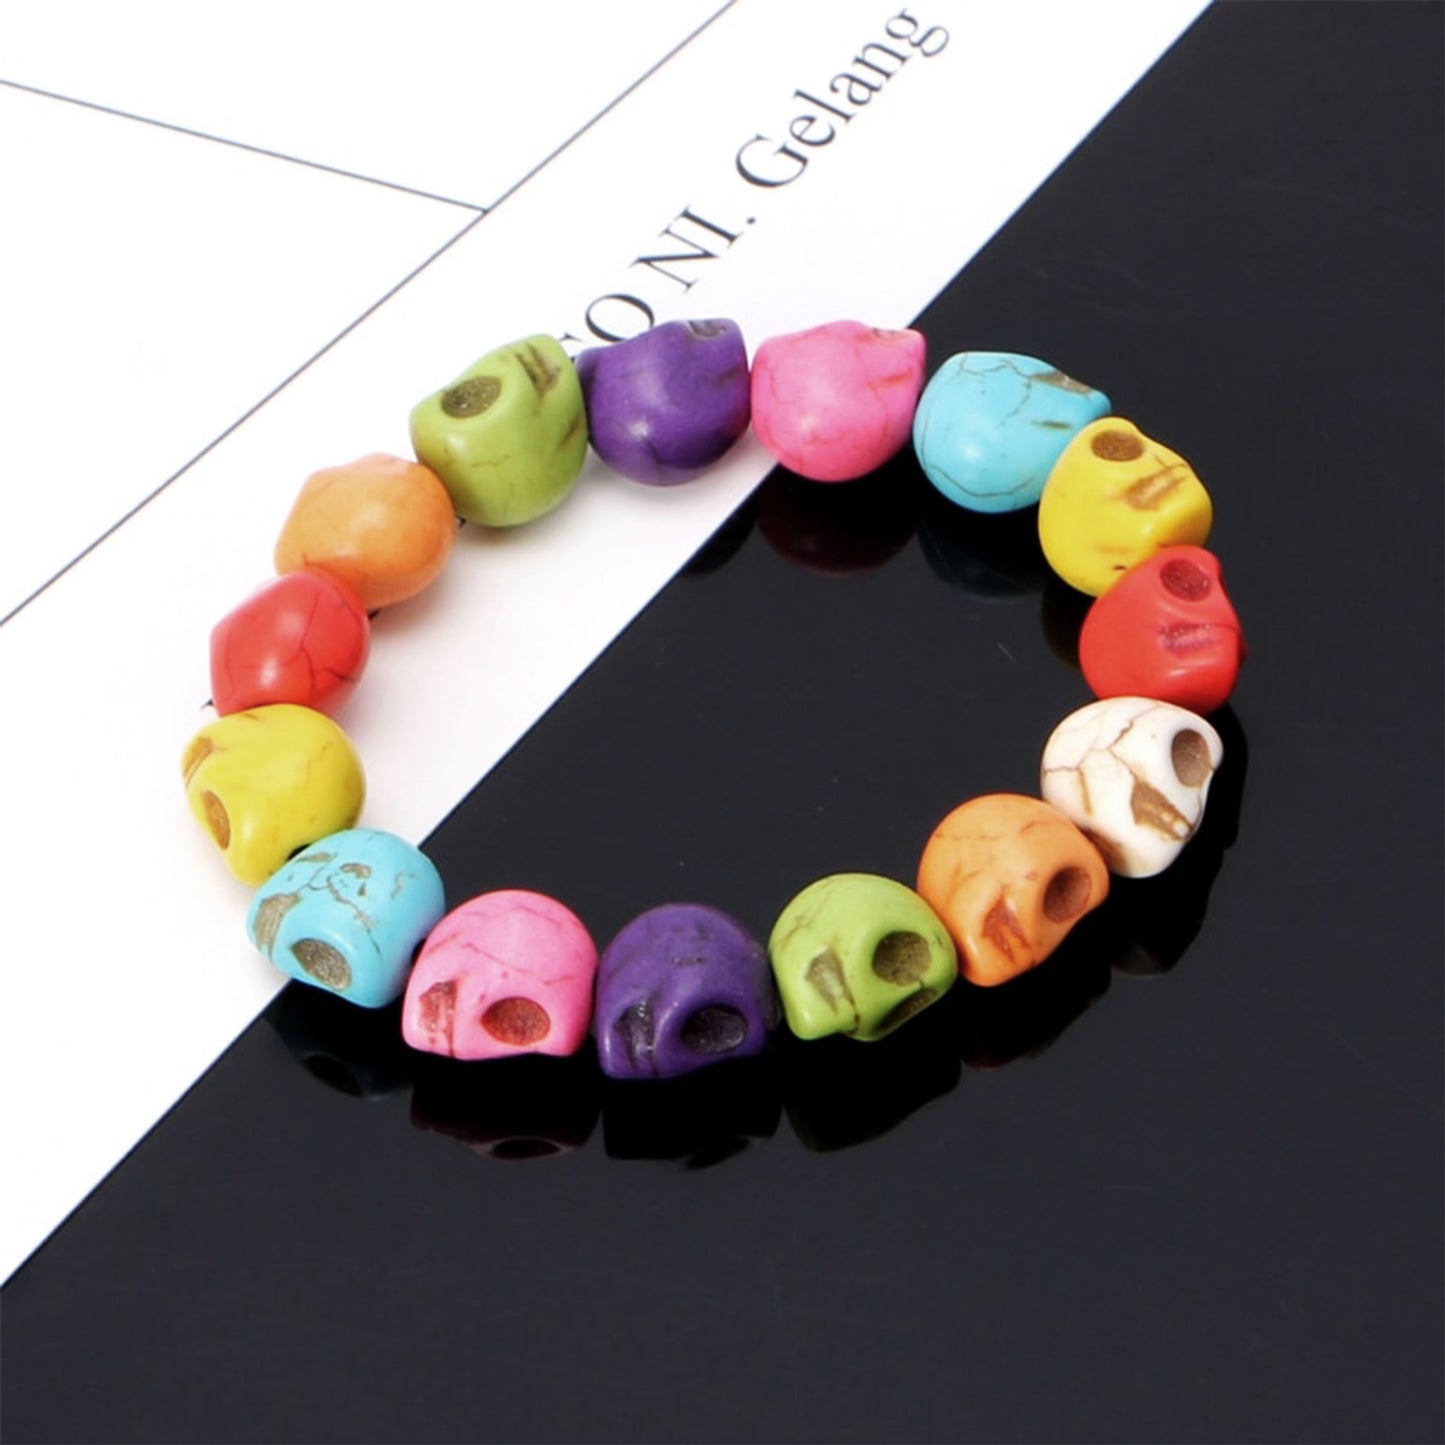 Multicolored natural stone skull beads wristband bracelet set. Mexican Day of the Dead or Dia de los Muertos joyeria brazaletes. Unisex halloween accessories